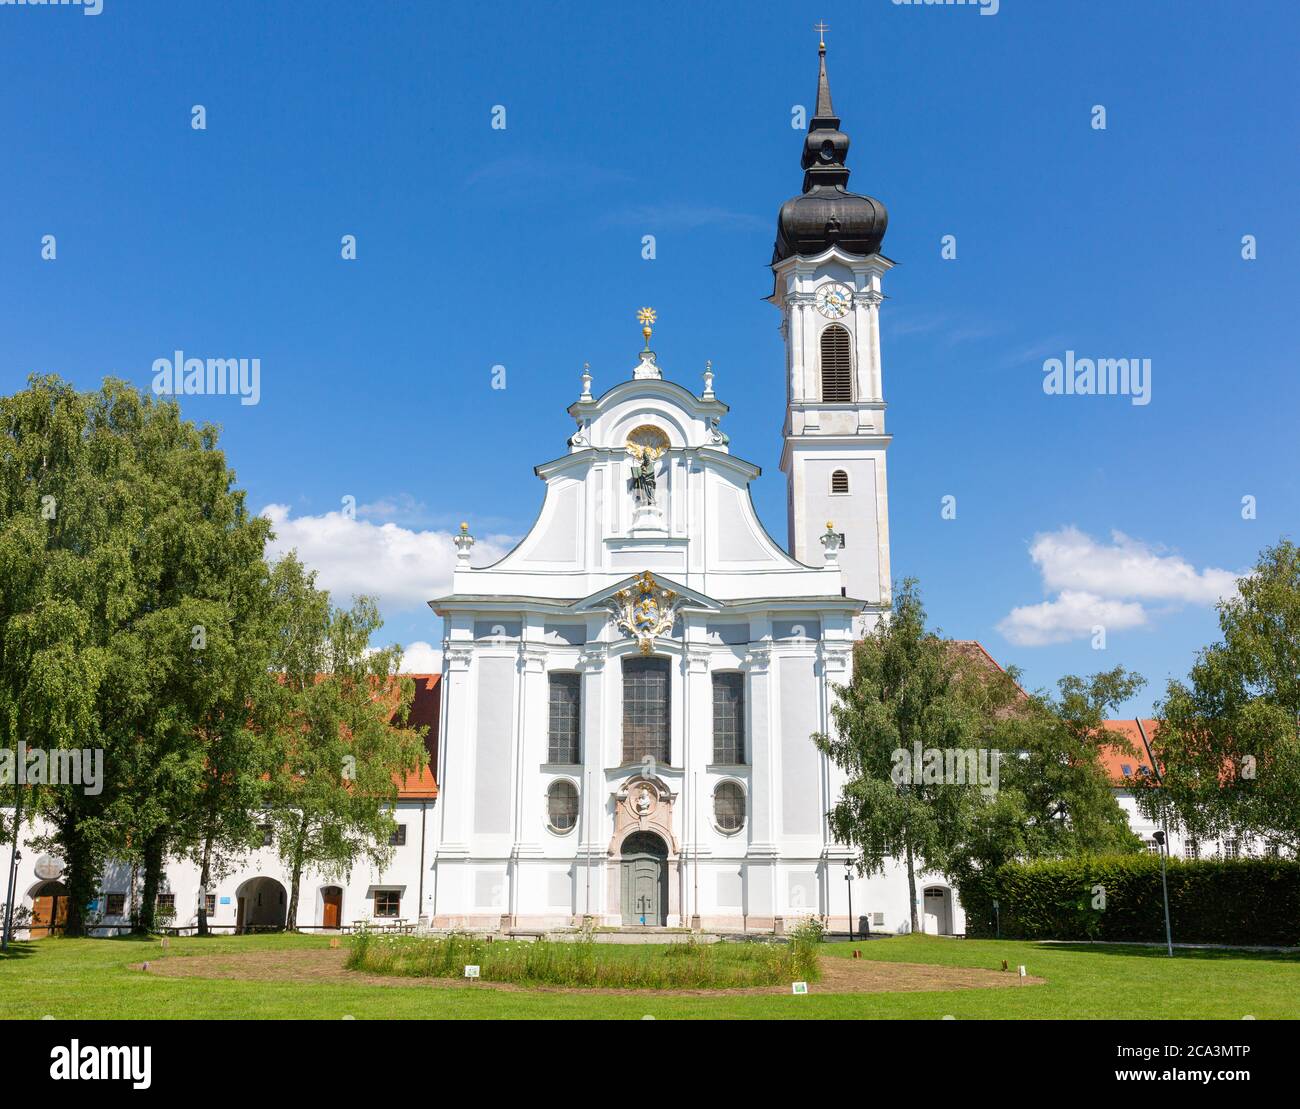 Diessen am Ammersee, Baviera / Germania - 19 luglio 2020: Vista frontale di Marienmünster Dießen. Chiesa cattolica situata all'estremità meridionale dell'Ammerse Foto Stock